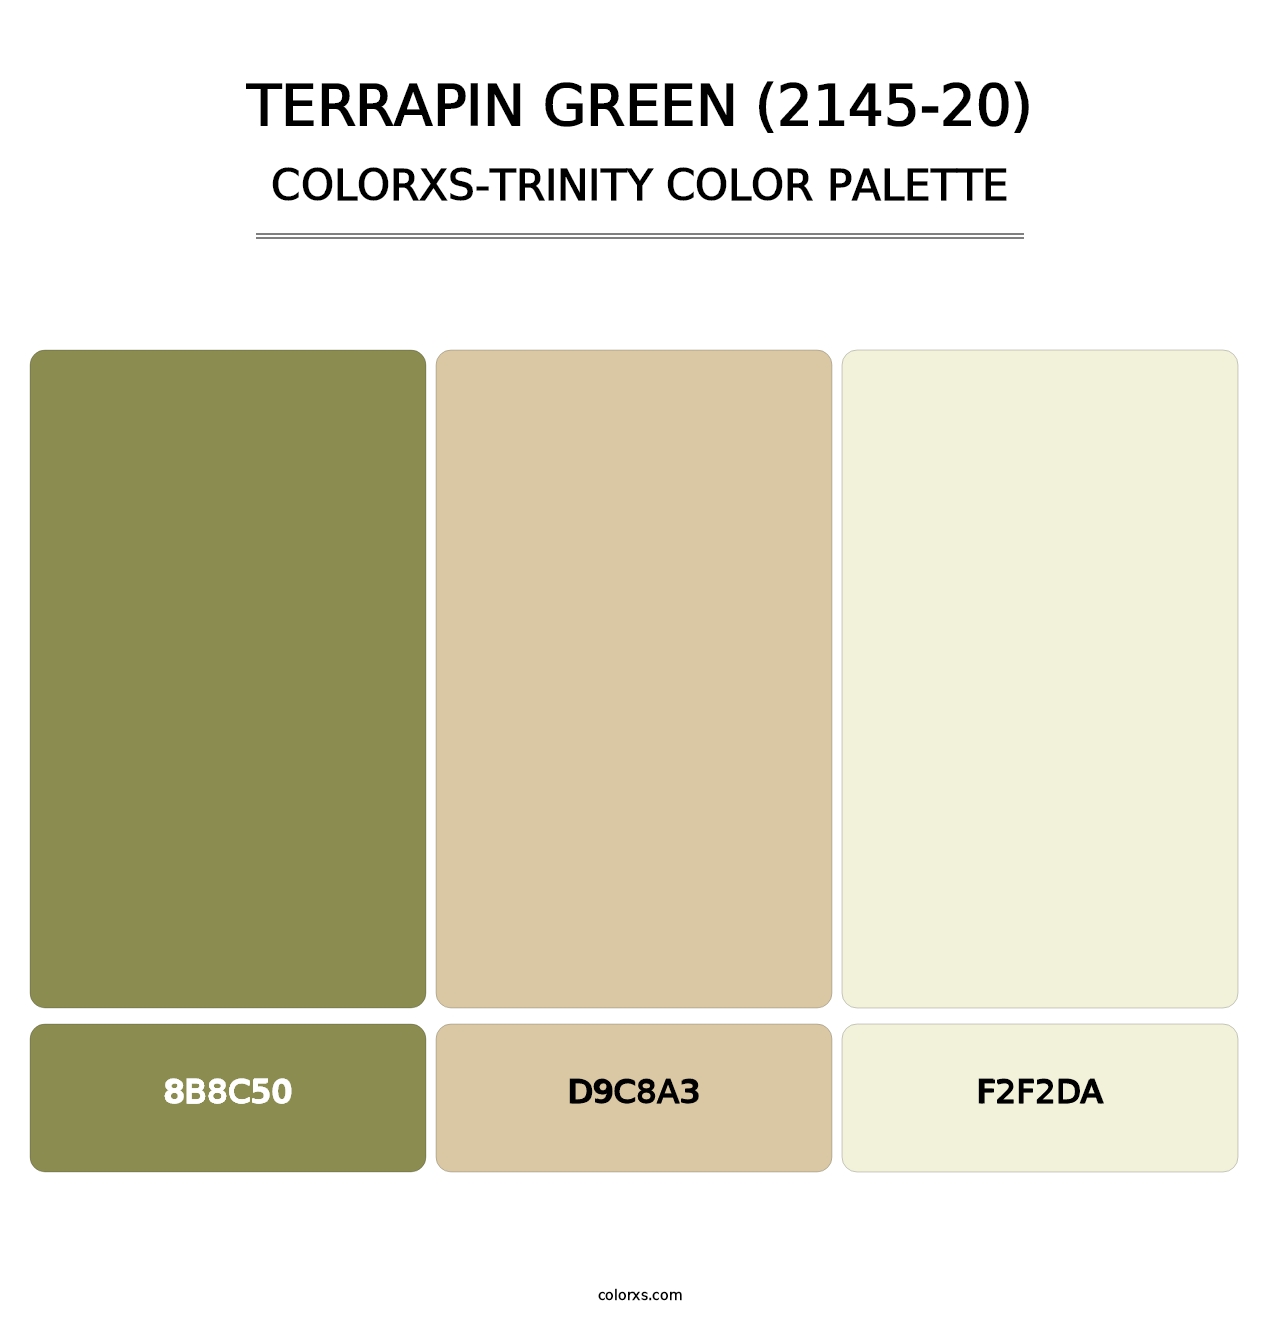 Terrapin Green (2145-20) - Colorxs Trinity Palette